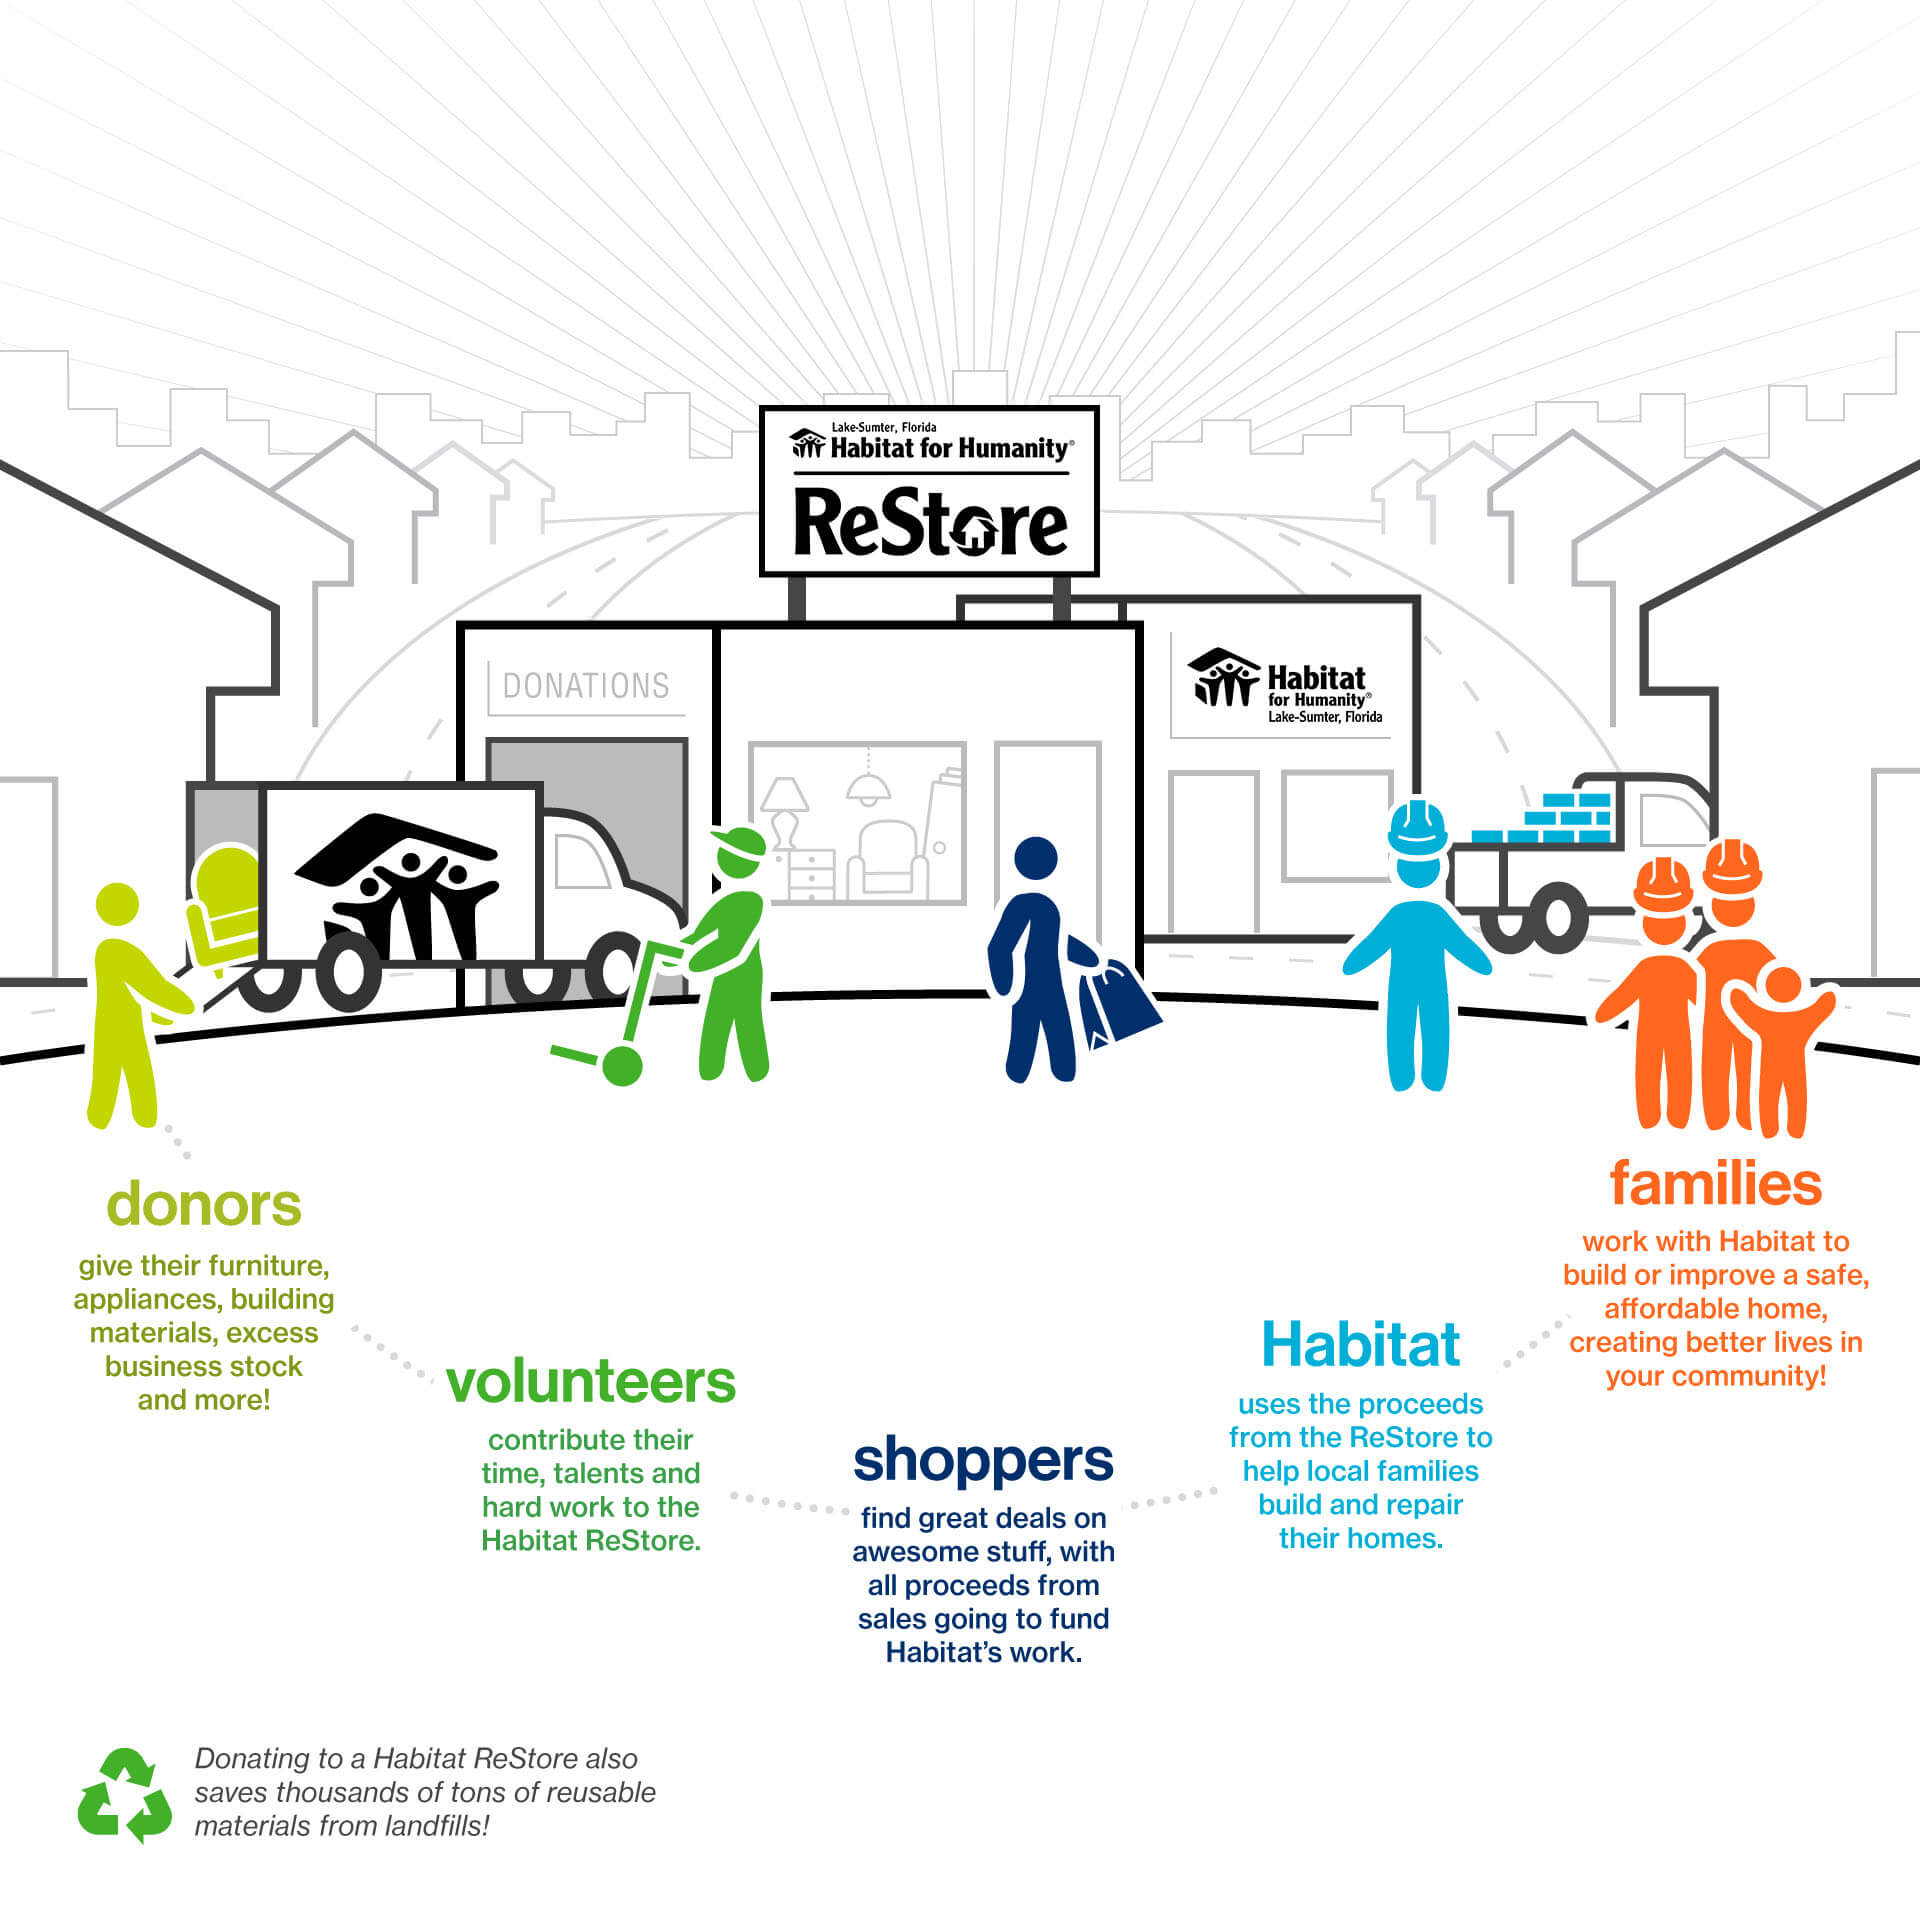 ReStore: Donors, Volunteers, Shoppers, Habitat, Families